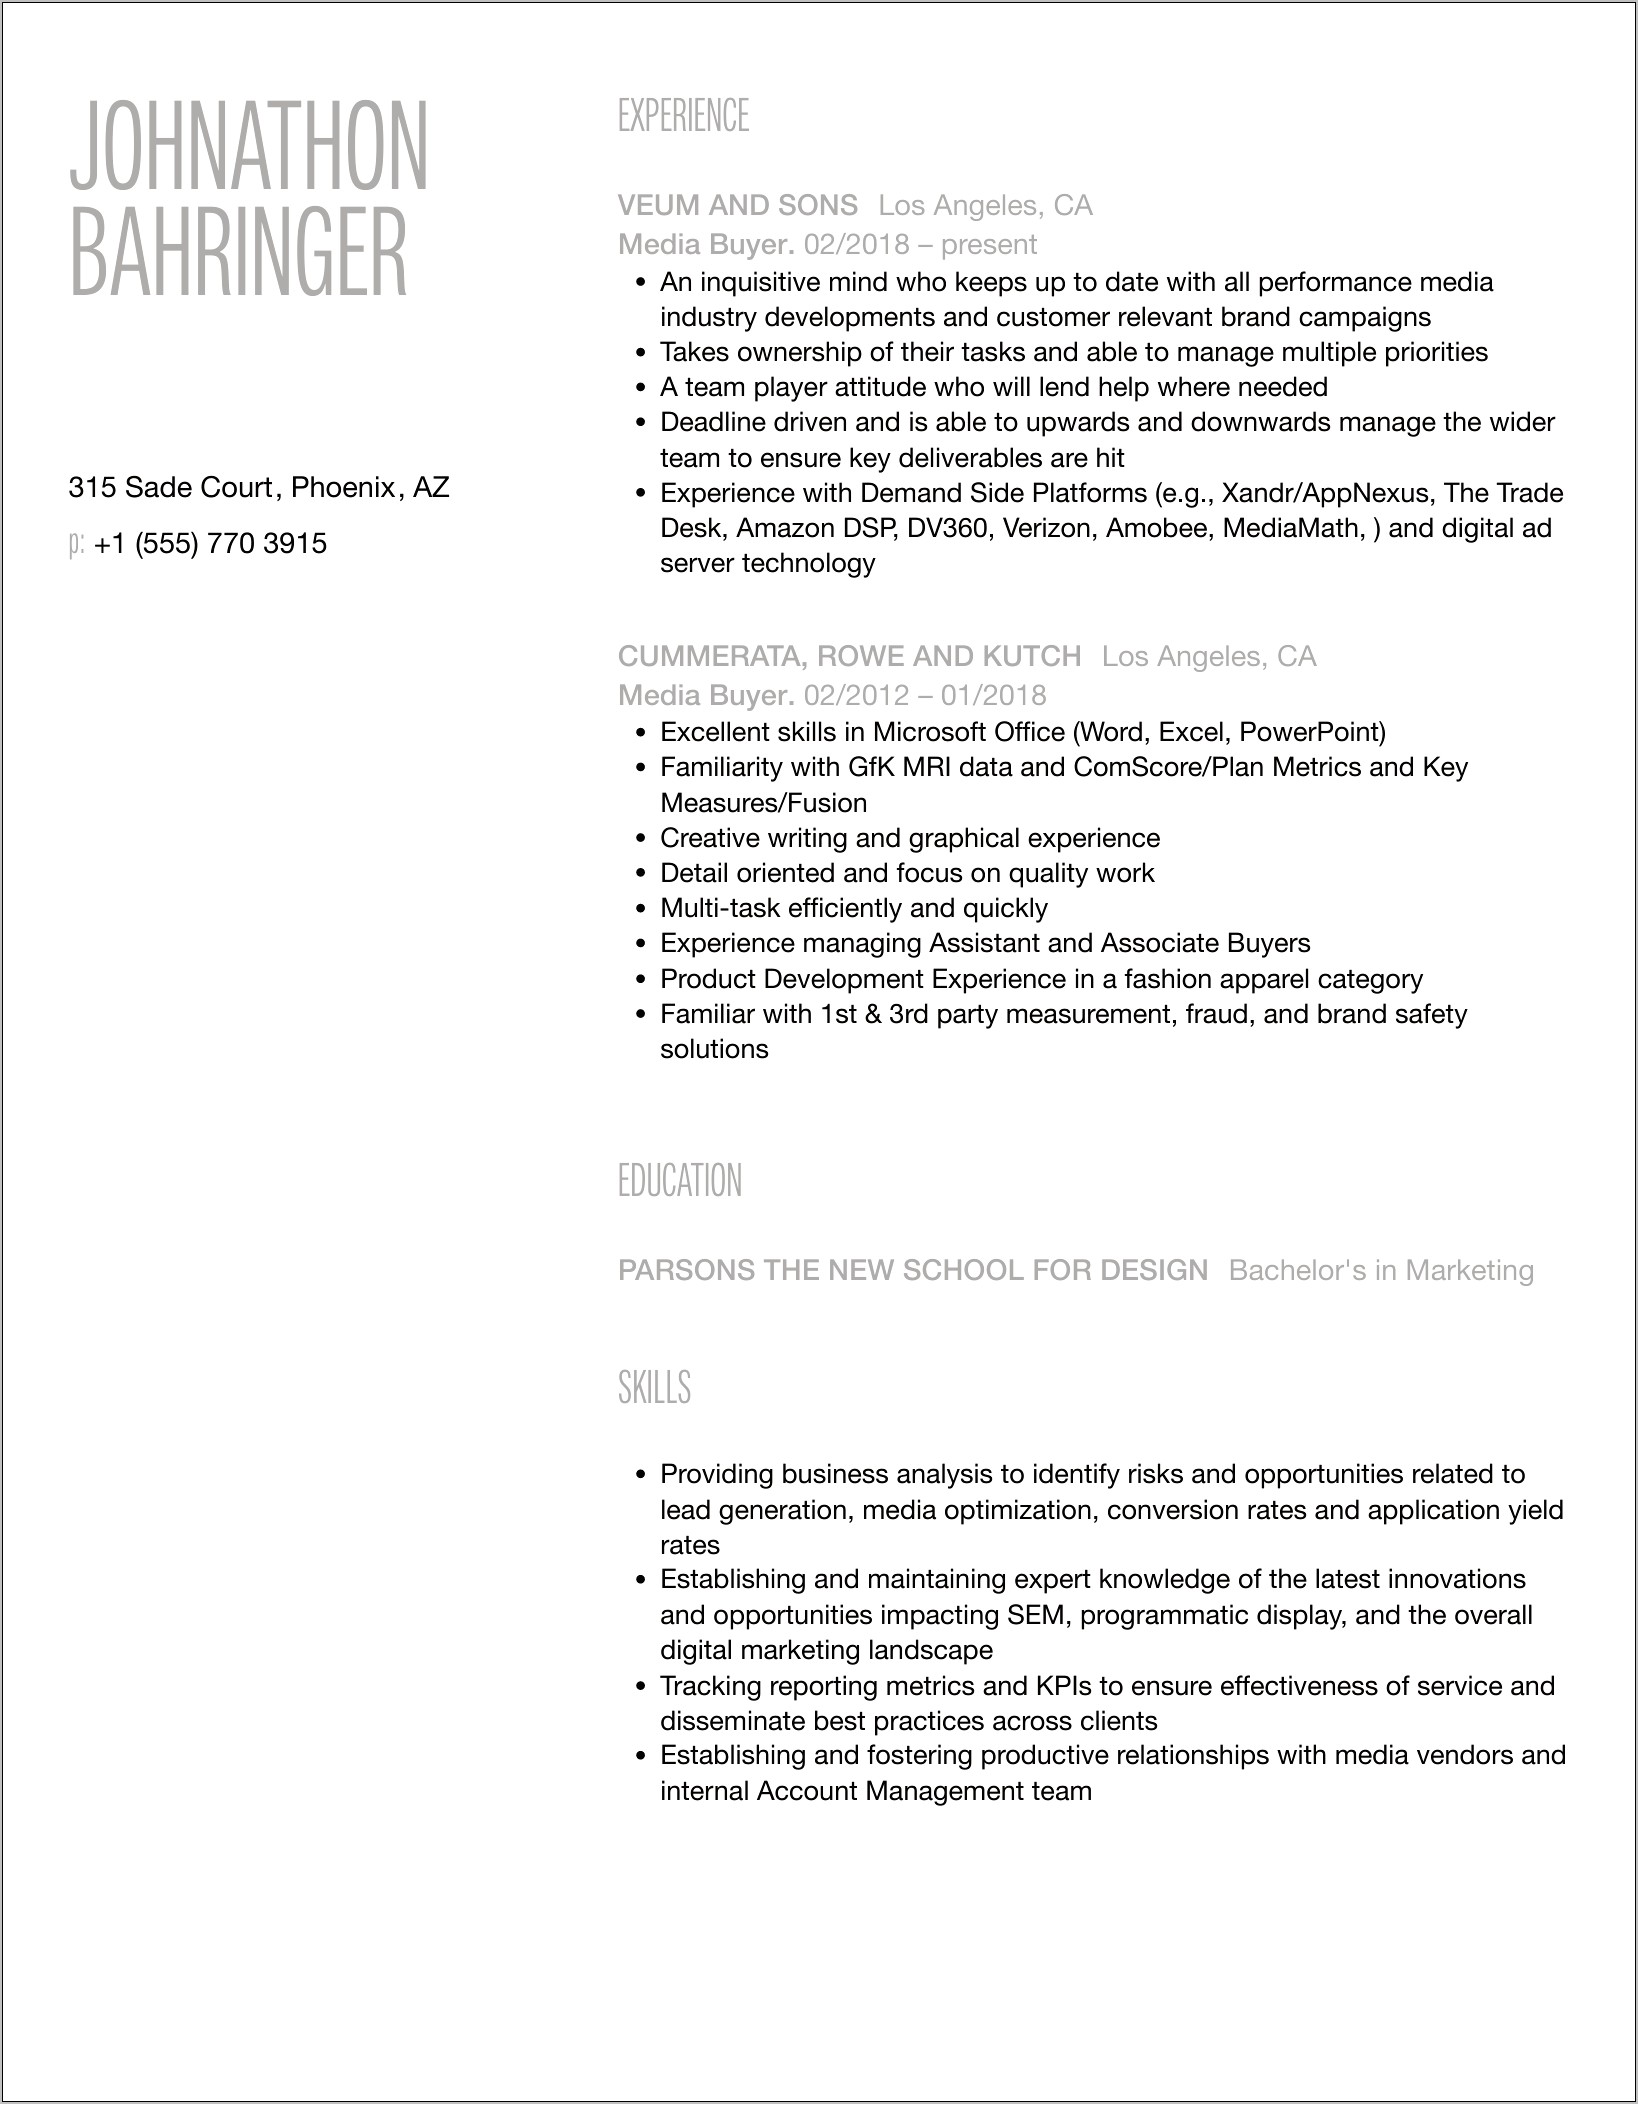 Media Buyer Job Description Resume